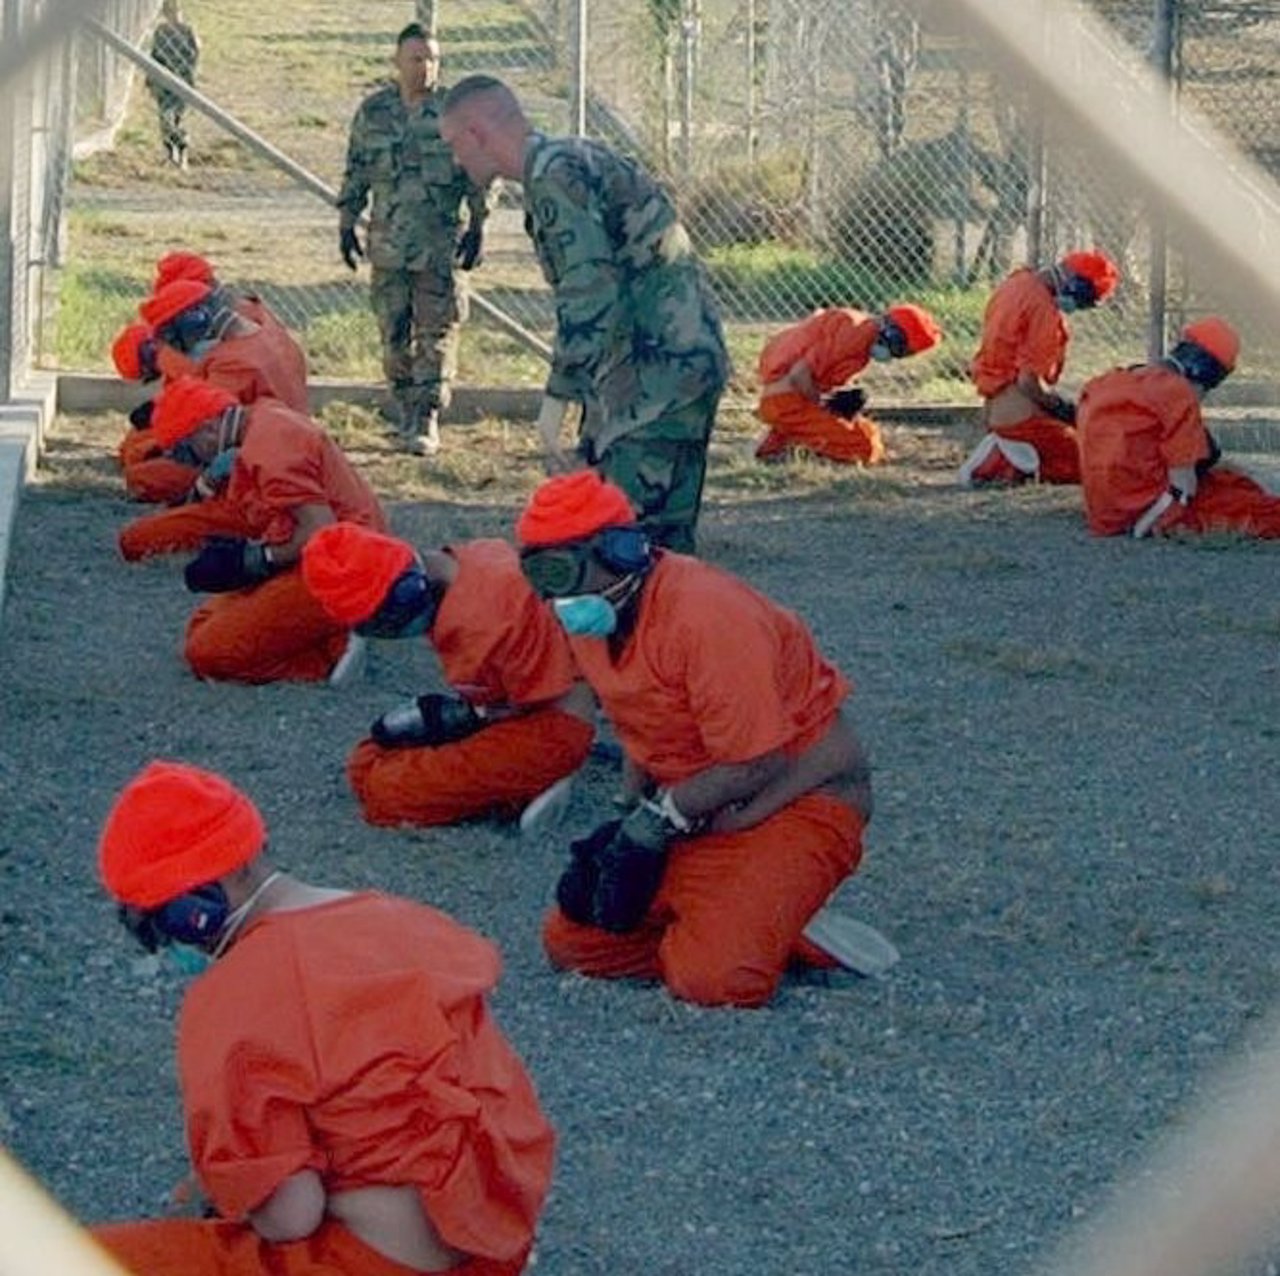 Un islamista pasa 13 años encarcelado en Guantánamo por error